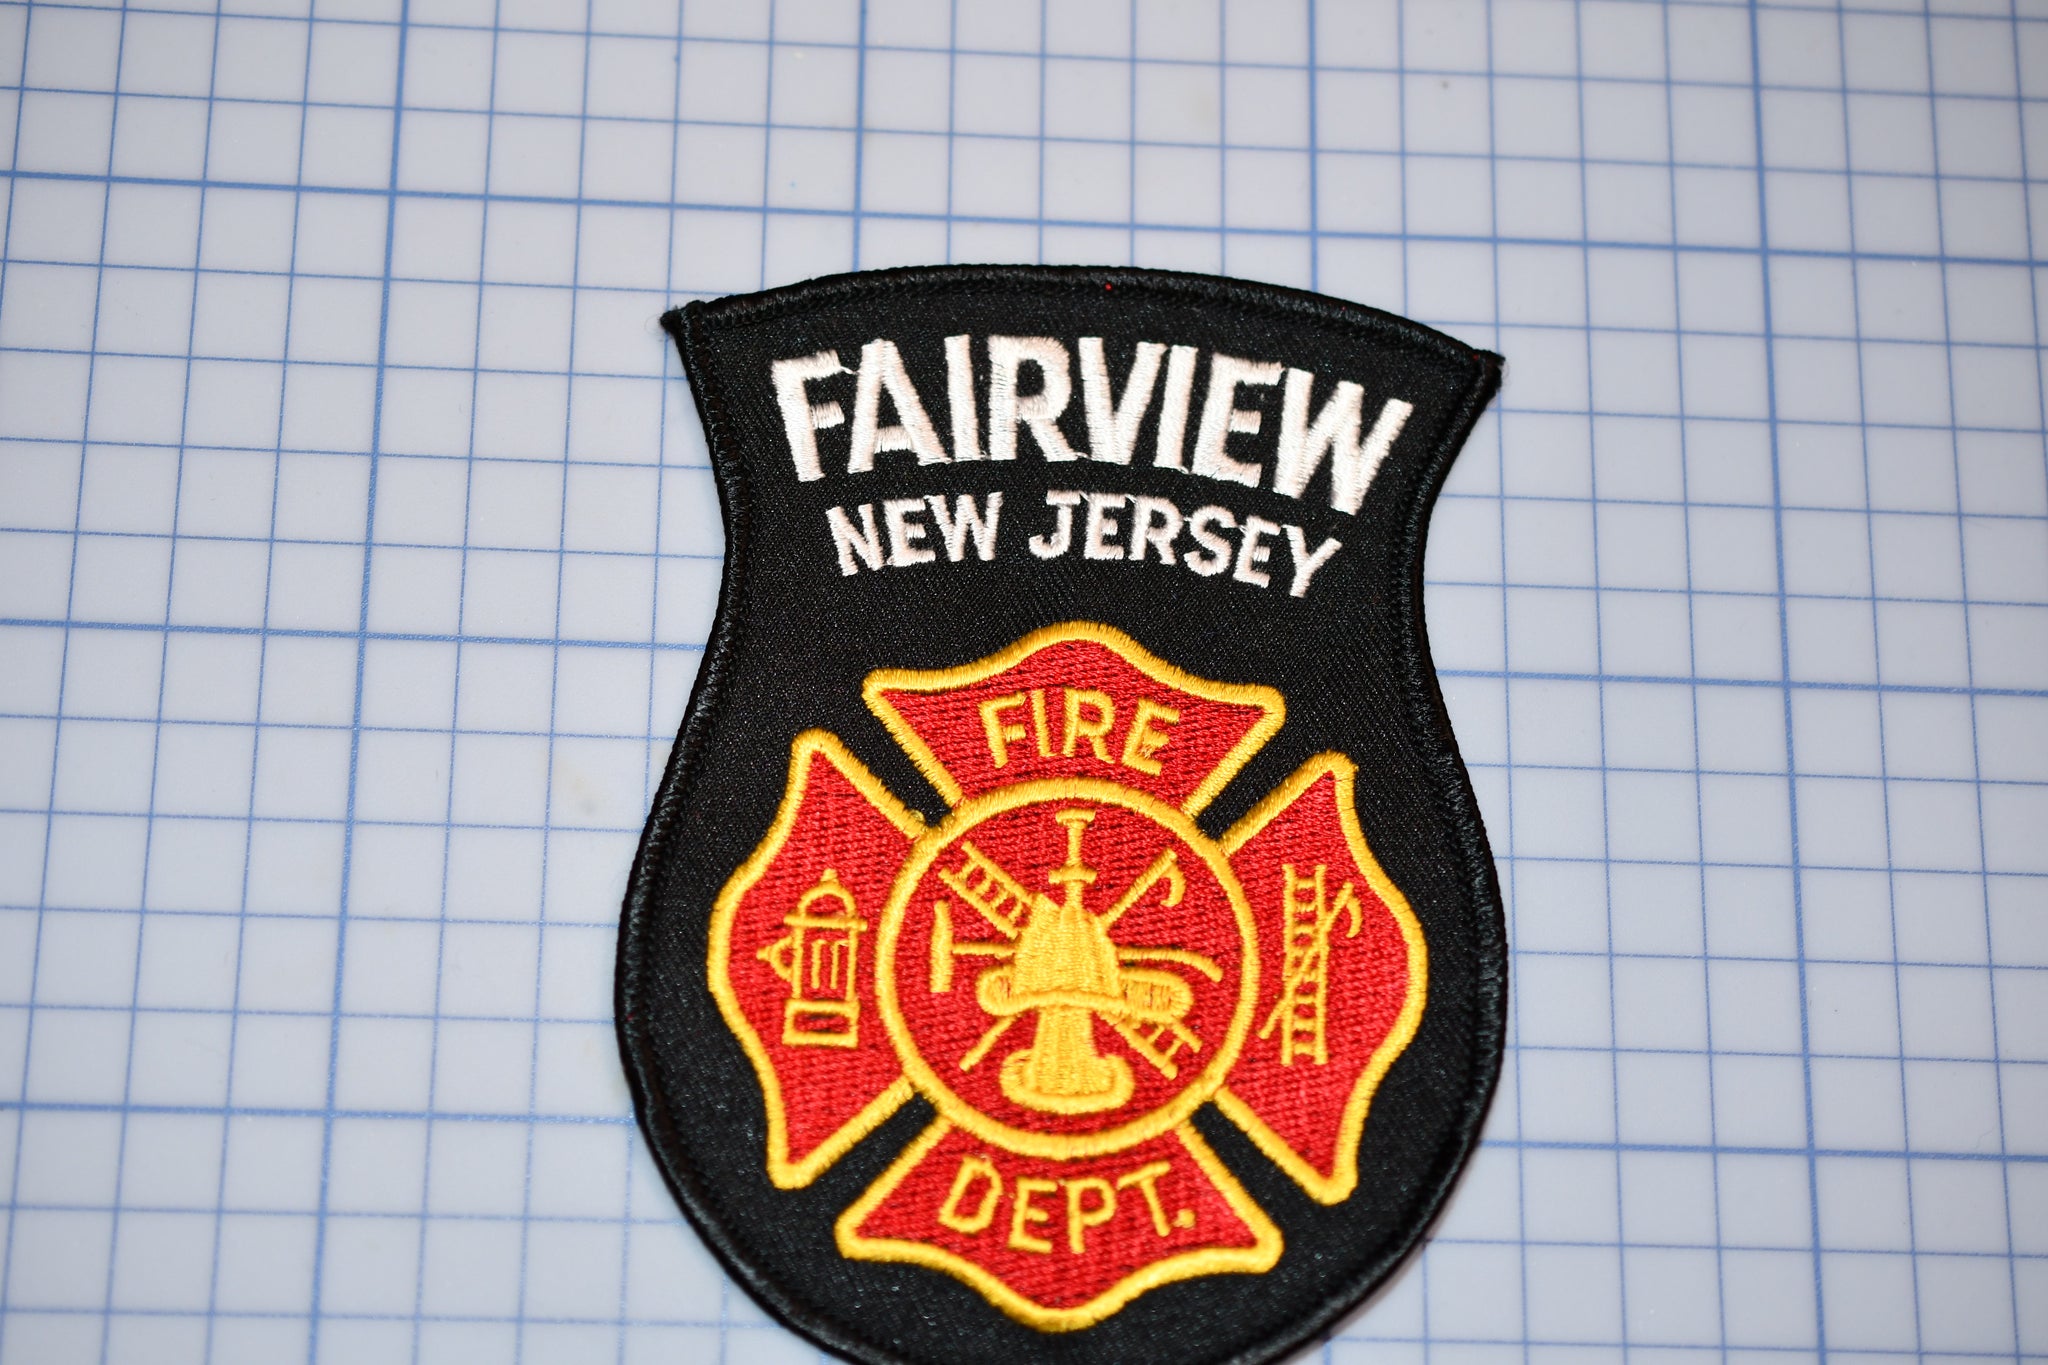 Fairview New Jersey Fire Department Patch (B29-346)